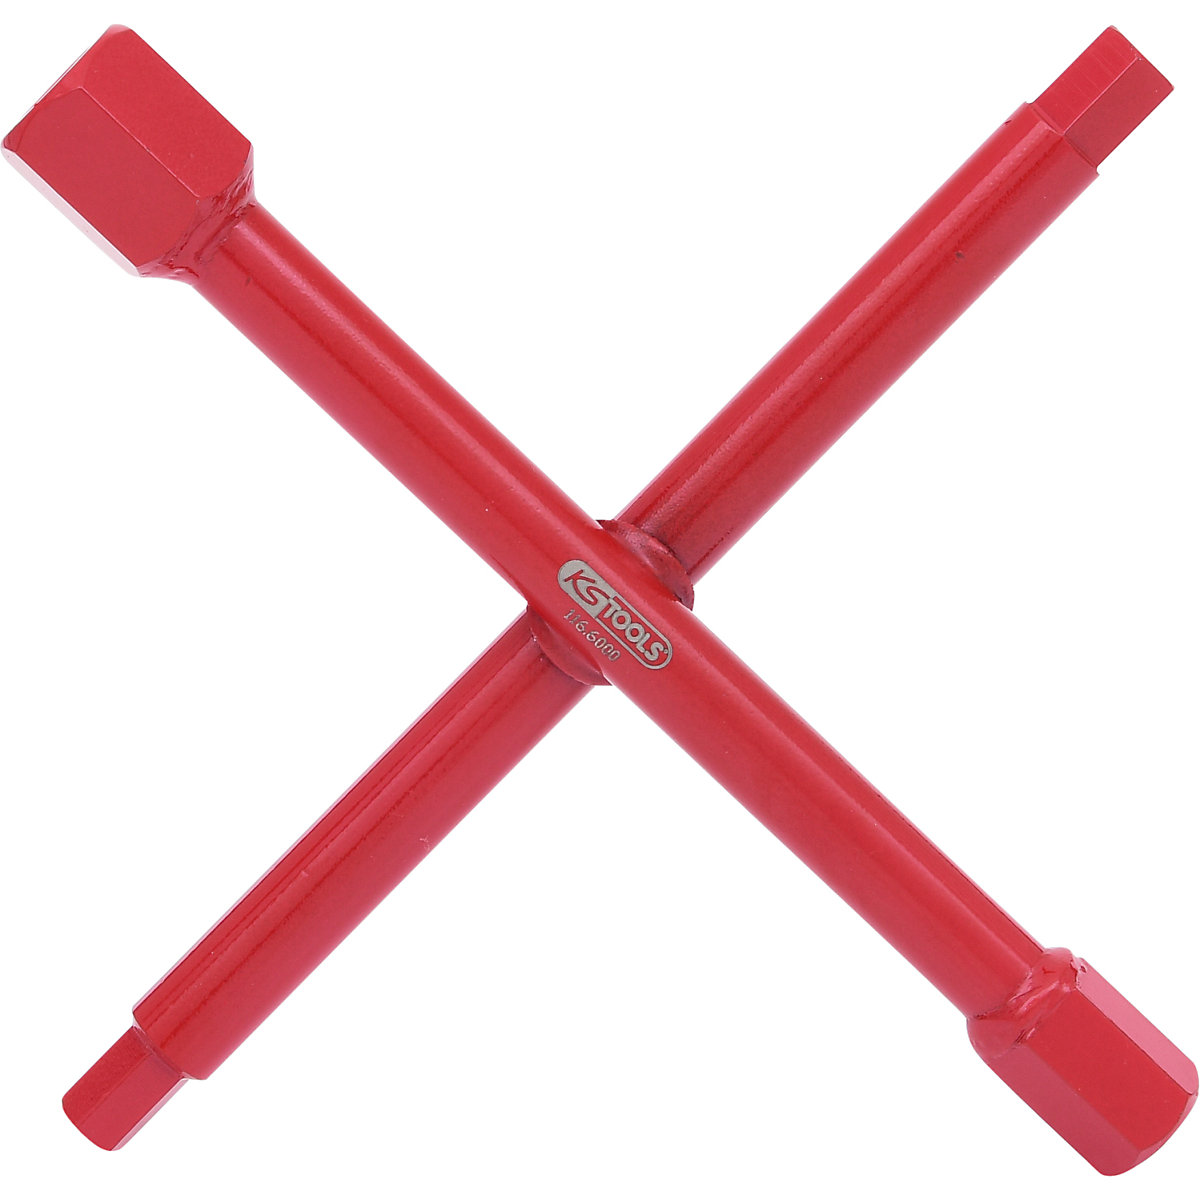 Cheie in cruce pentru instalații sanitare – KS Tools